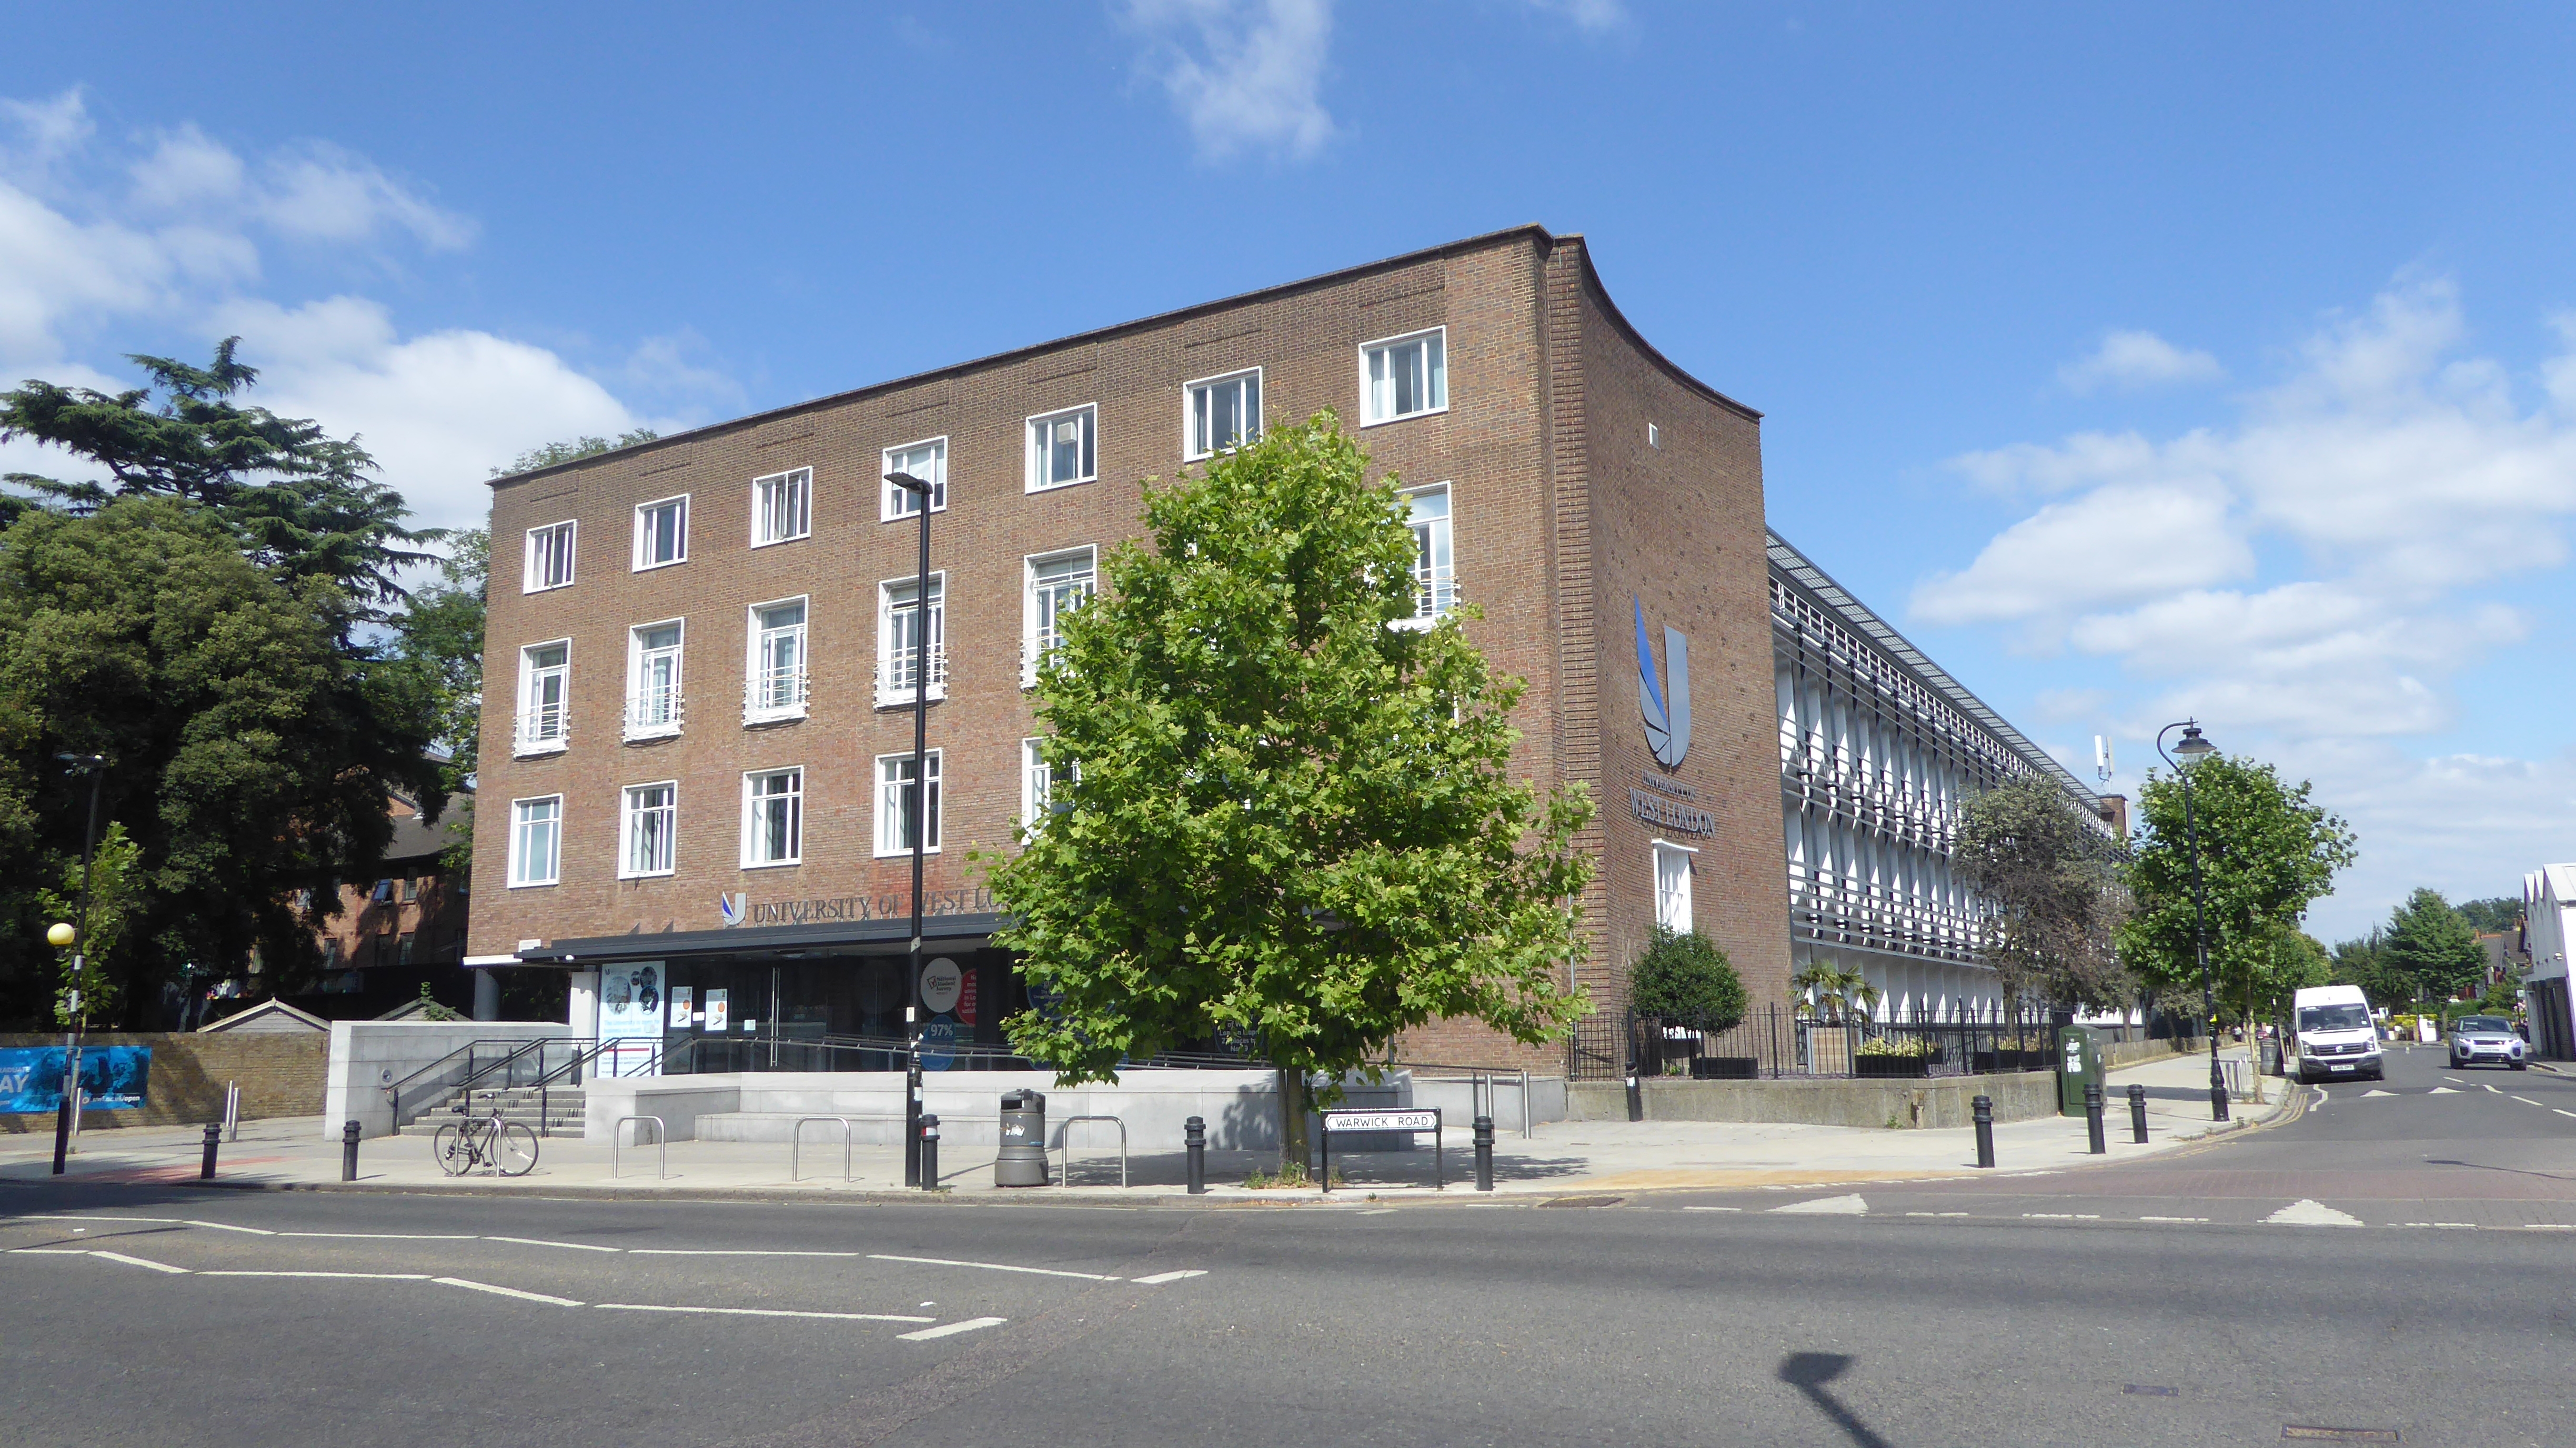 File:University of West London Building in Ealing.jpg - Wikimedia Commons